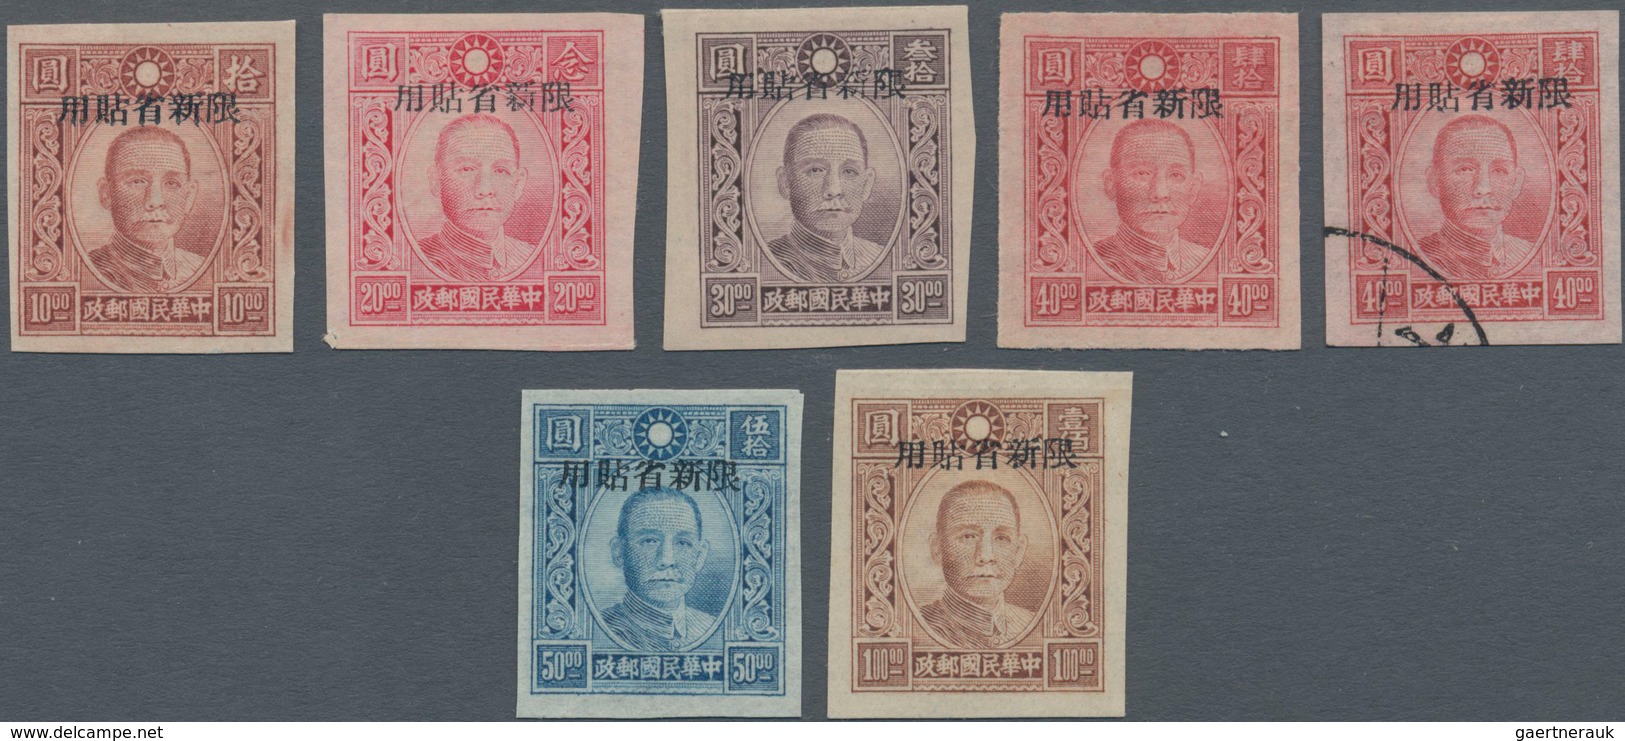 China - Provinzausgaben - Sinkiang (1915/45): 1943, SYS $4-$100, Set Of 6, Imperforated, Unused No G - Xinjiang 1915-49